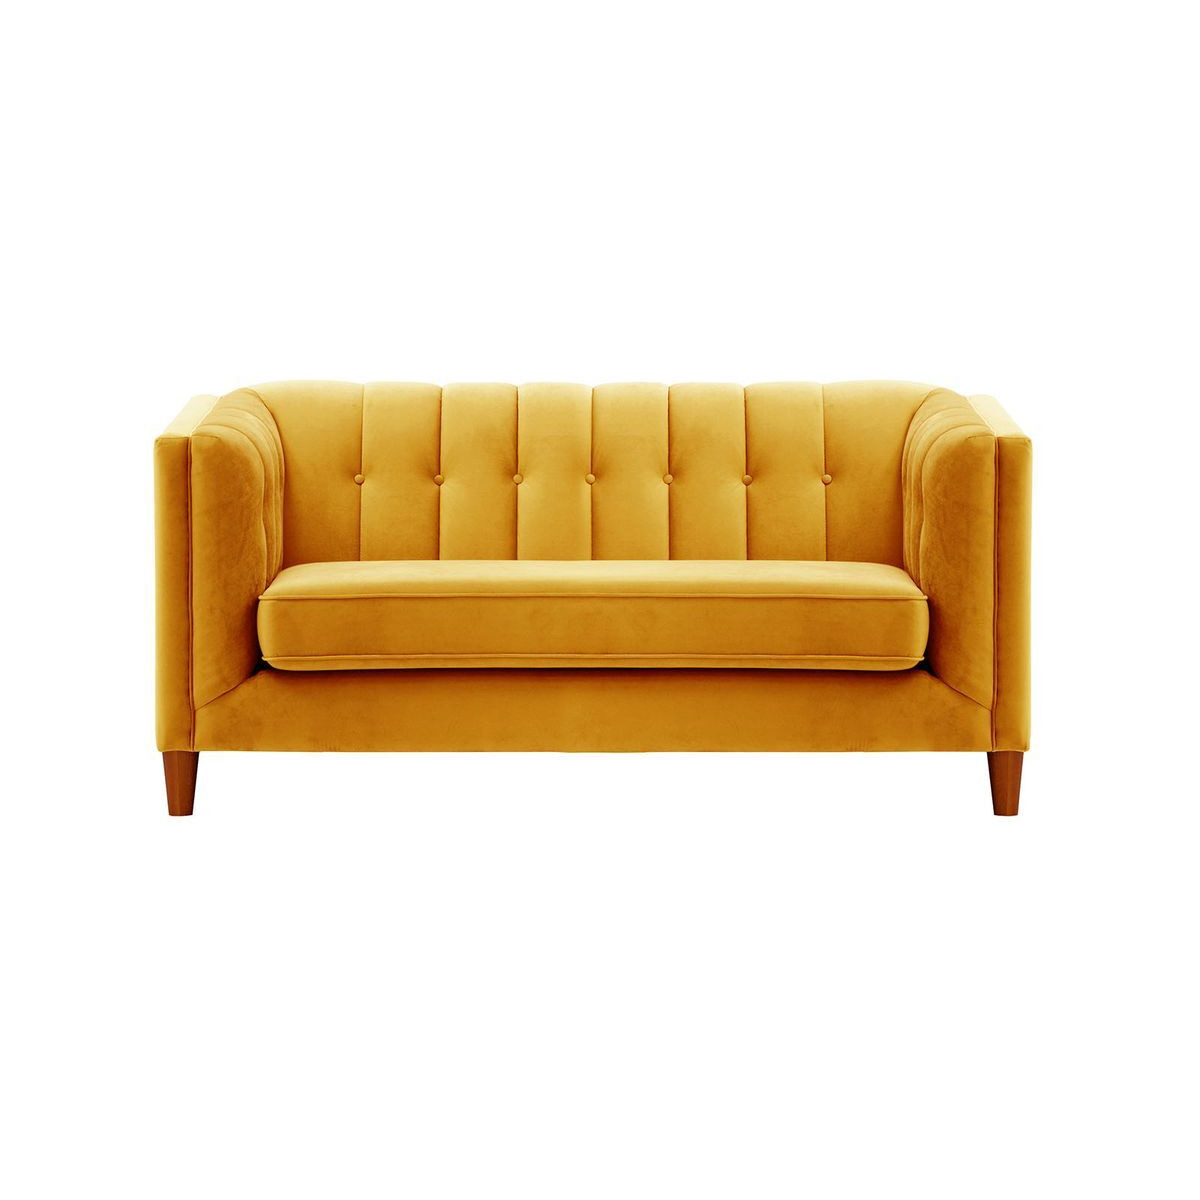 Sodre 2 Seater Sofa, mustard, Leg colour: aveo - image 1